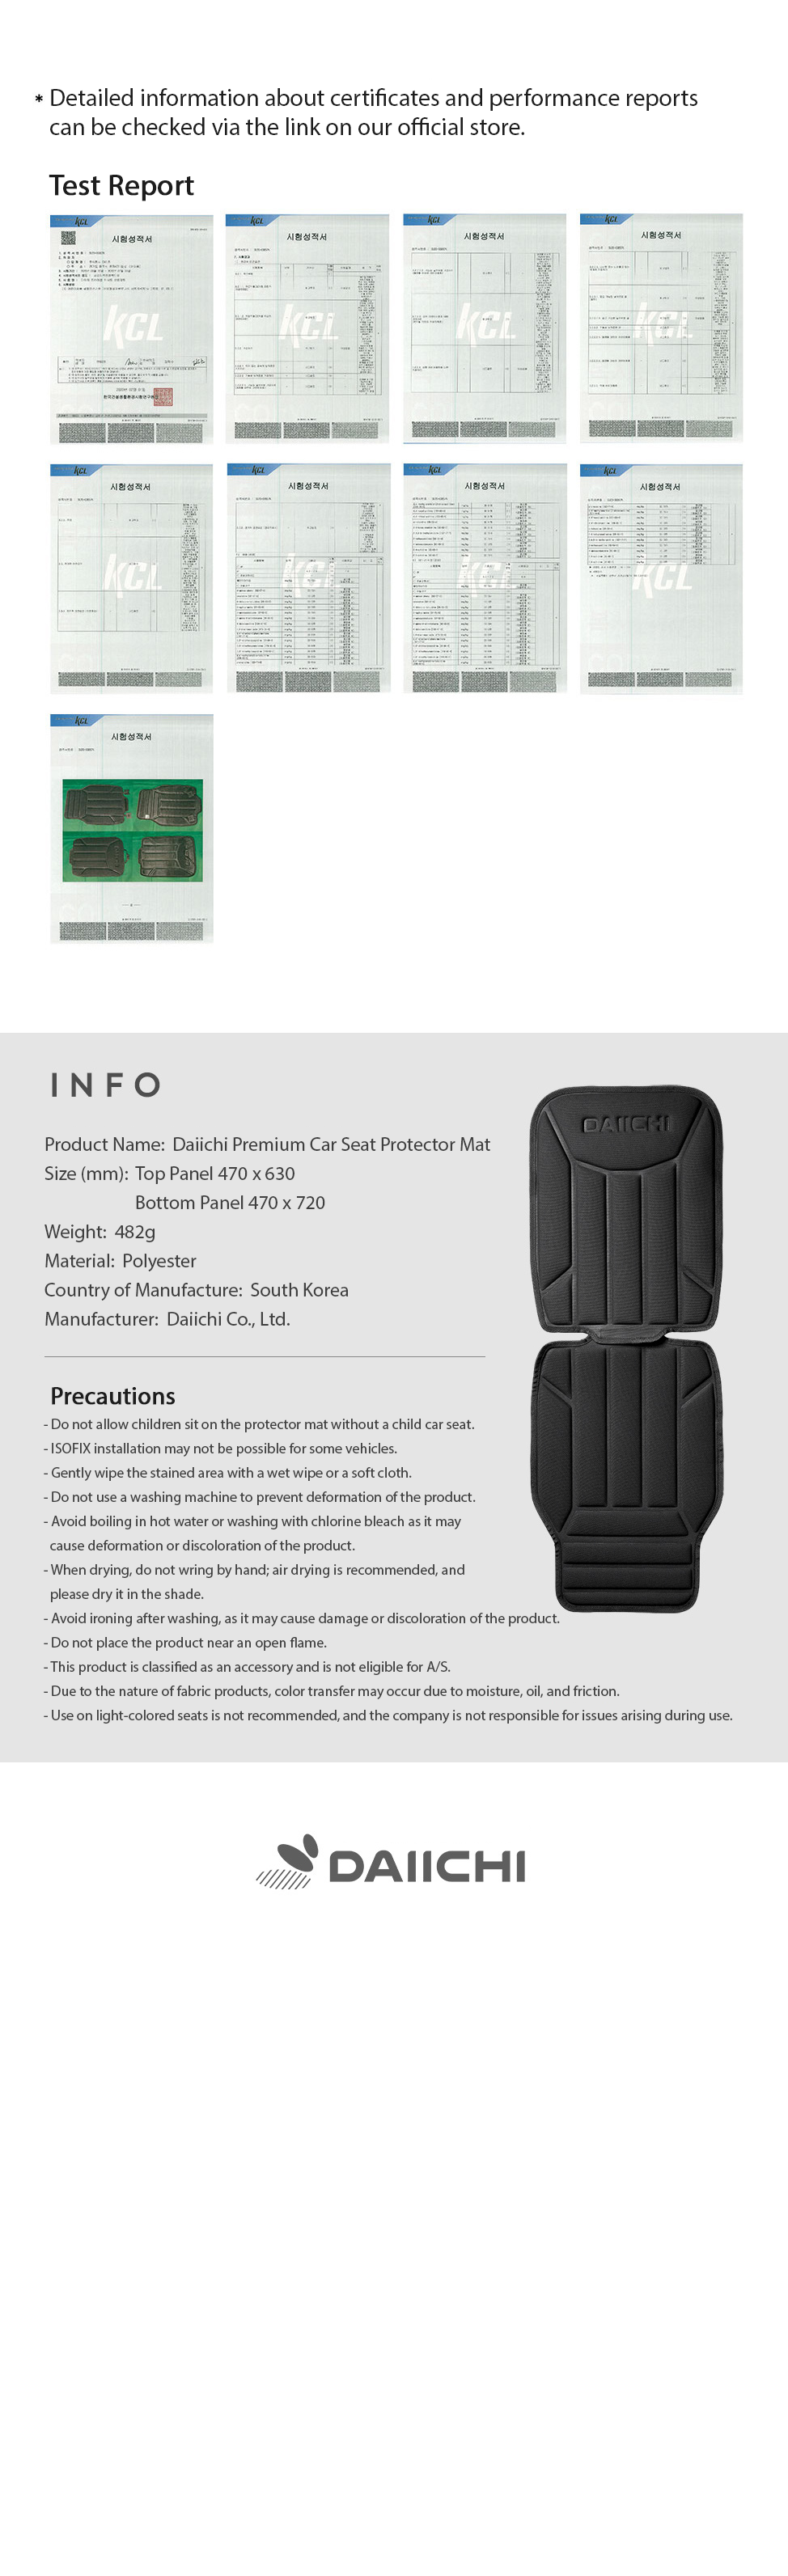 Daiichi Premium Car Seat Protector Mat Test Report